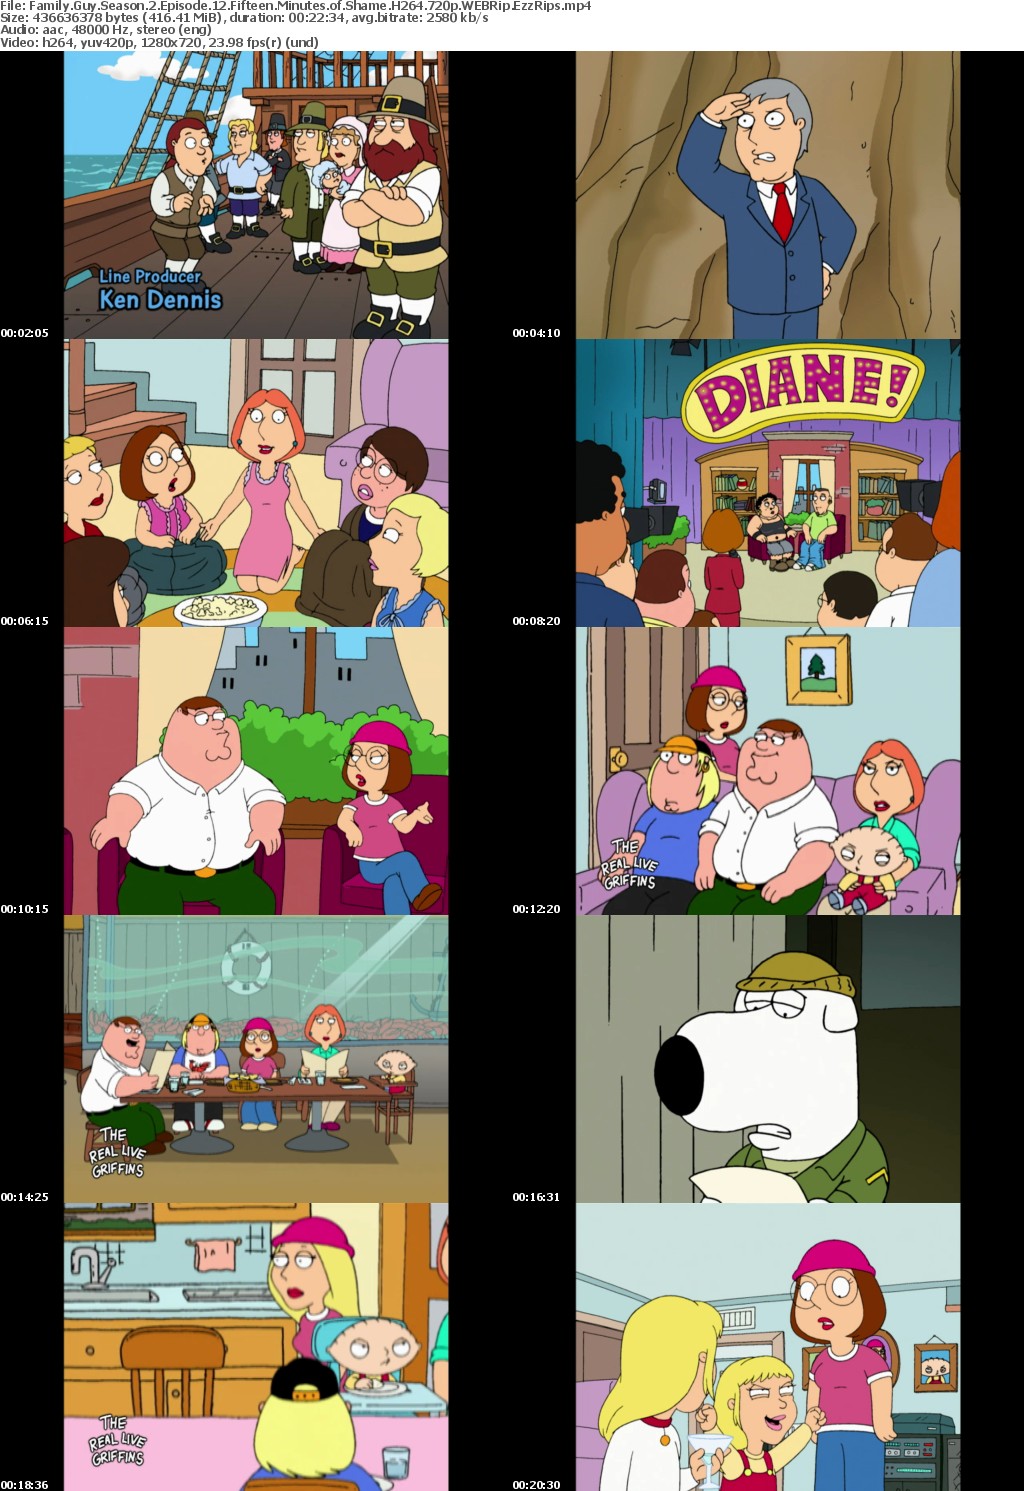 Family Guy Season 2 Episode 12 Fifteen Minutes of Shame H264 720p WEBRip EzzRips